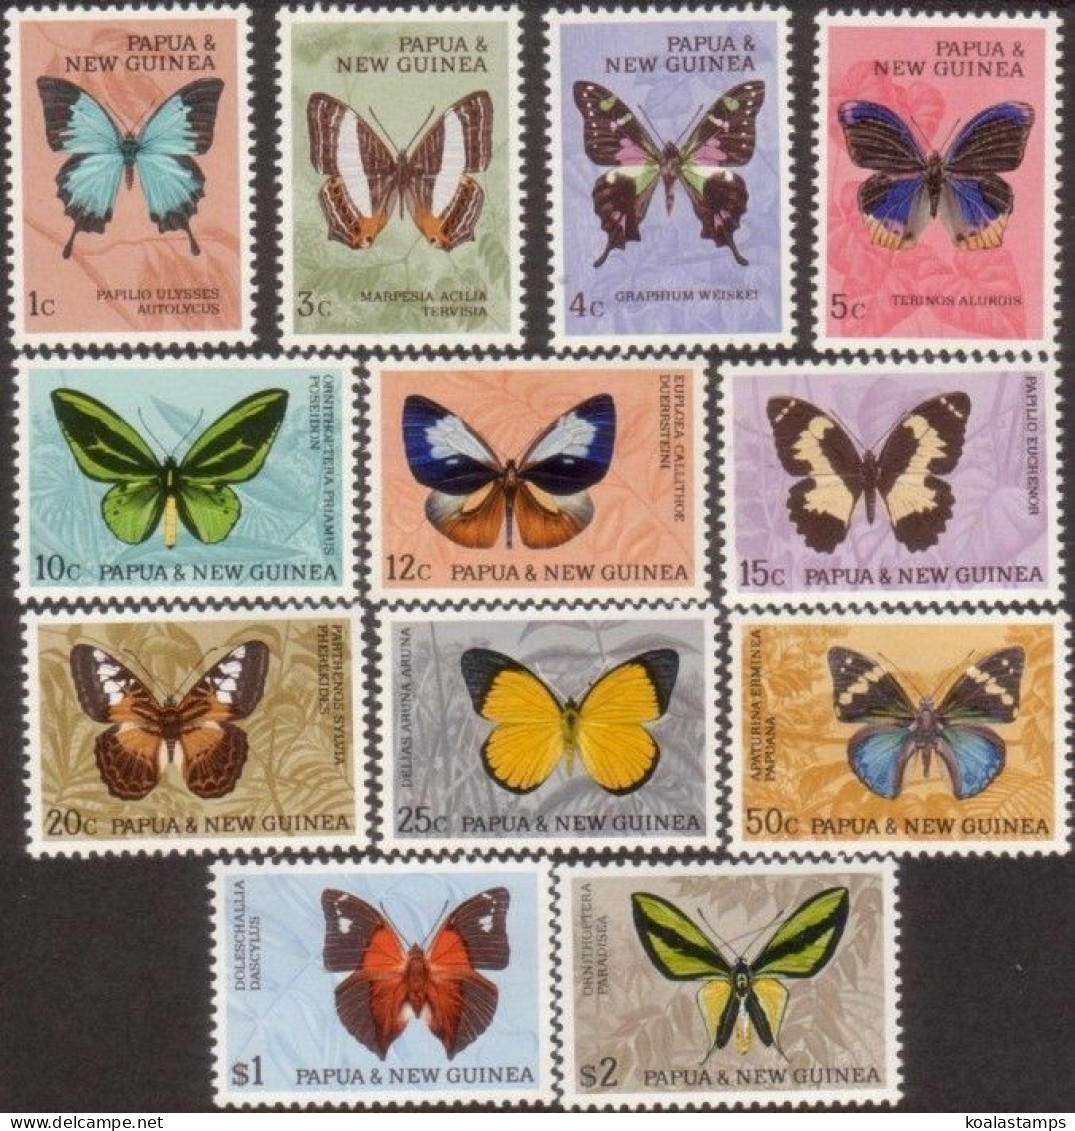 Papua New Guinea 1966 SG82-92 Butterfly Series MNH - Papoea-Nieuw-Guinea